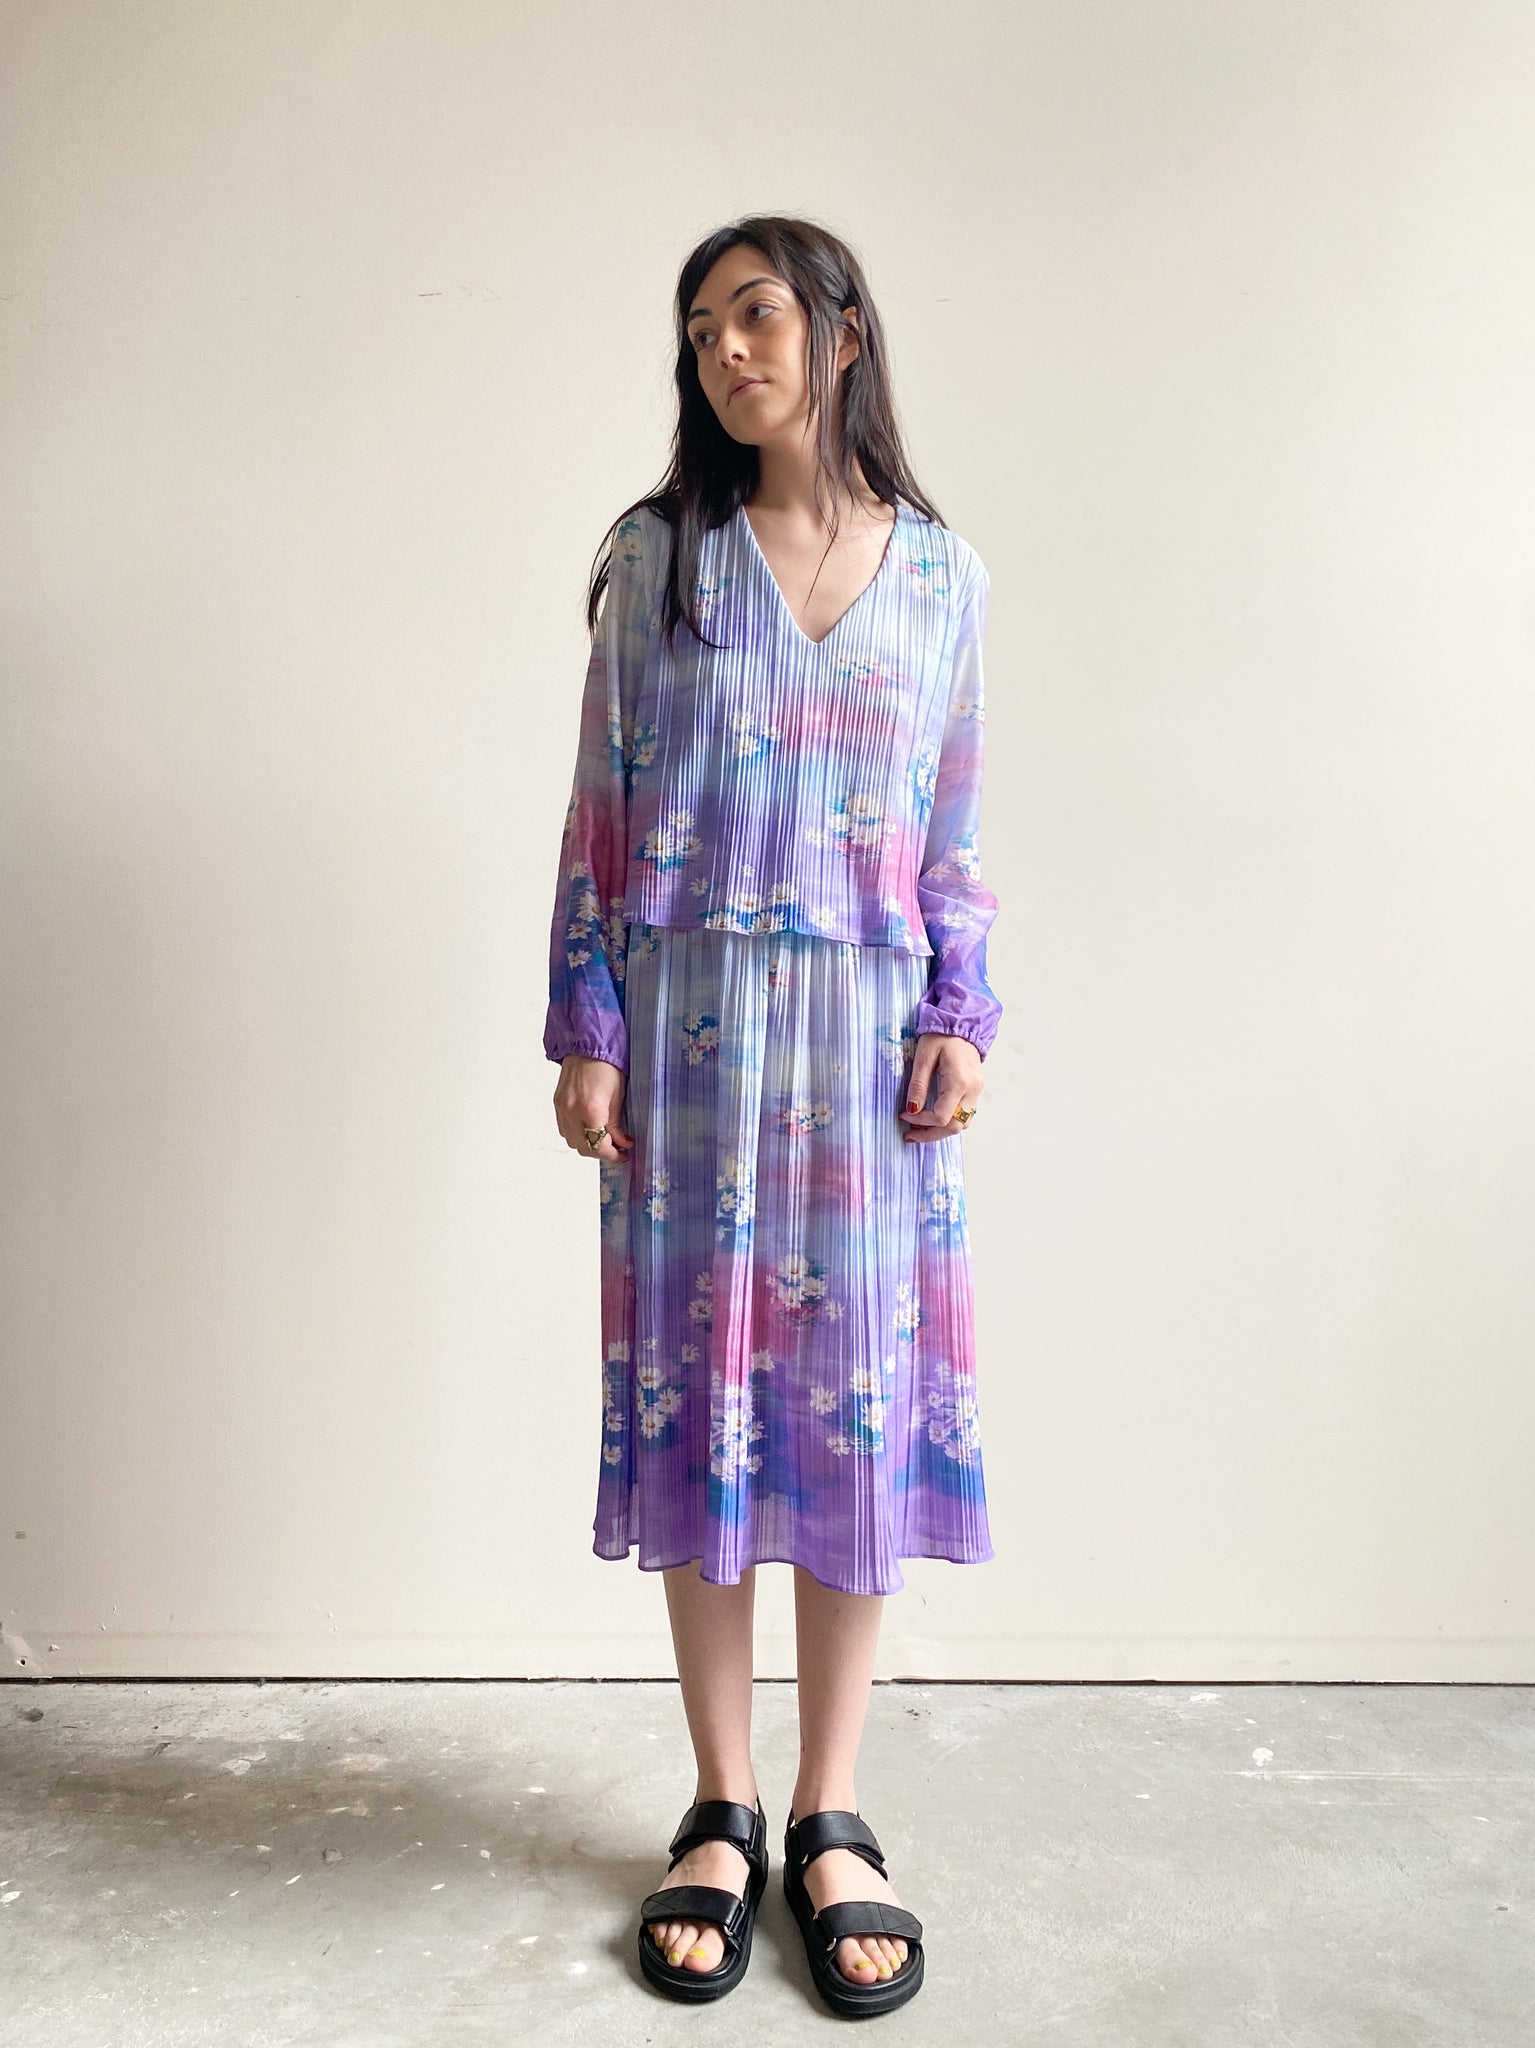 Vintage Pastel Pink, Purple and Blue Floral Print Long Sleeve Dress (M)